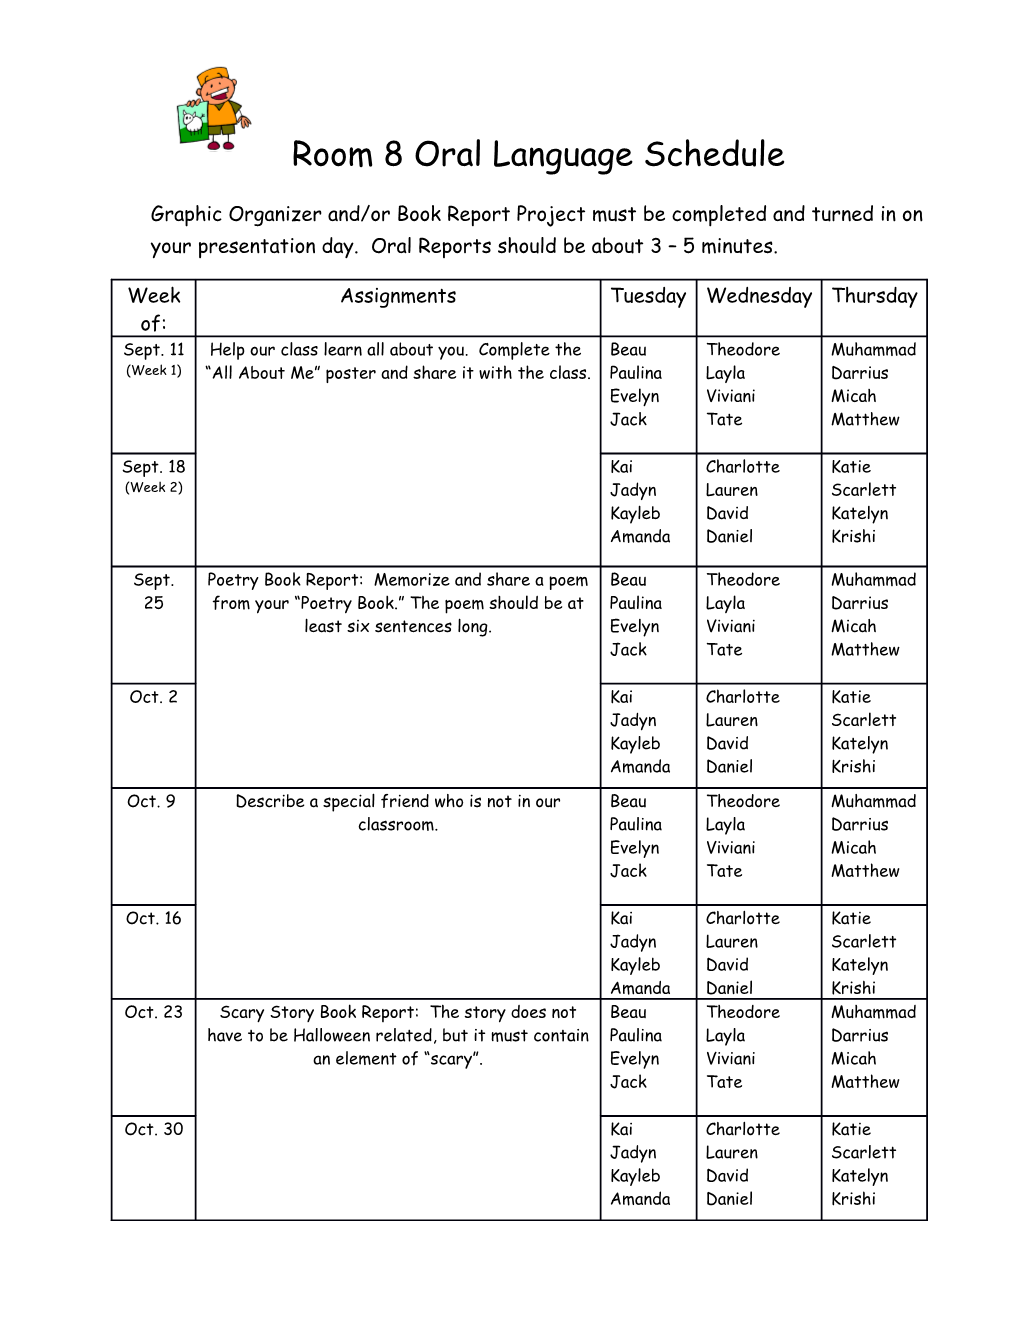 Room 8 Oral Language Schedule